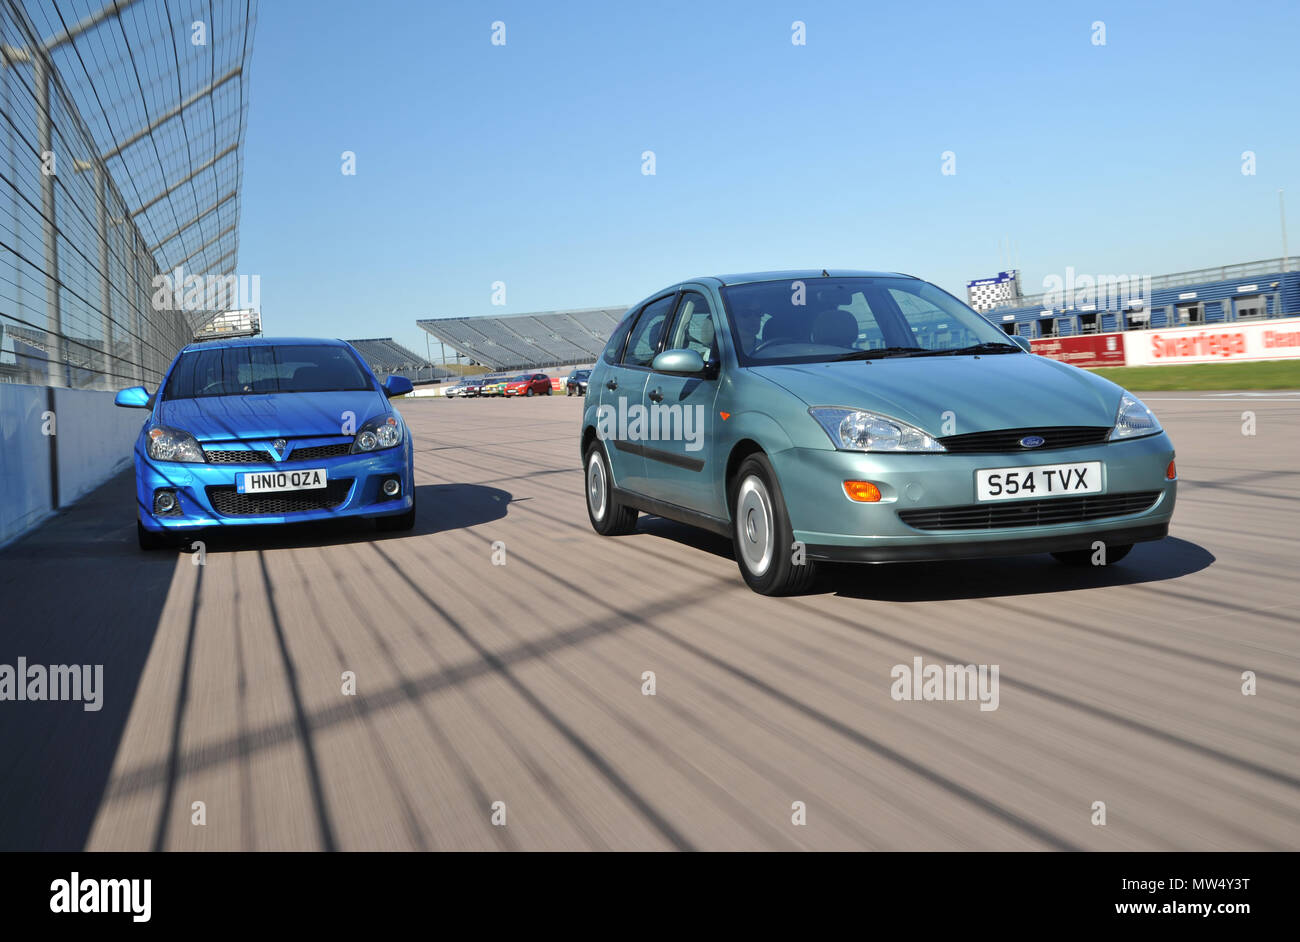 1998 Mk1 Ford Fiesta and 2010 mk5 Vauxhall Astra British hatchback cars Stock Photo